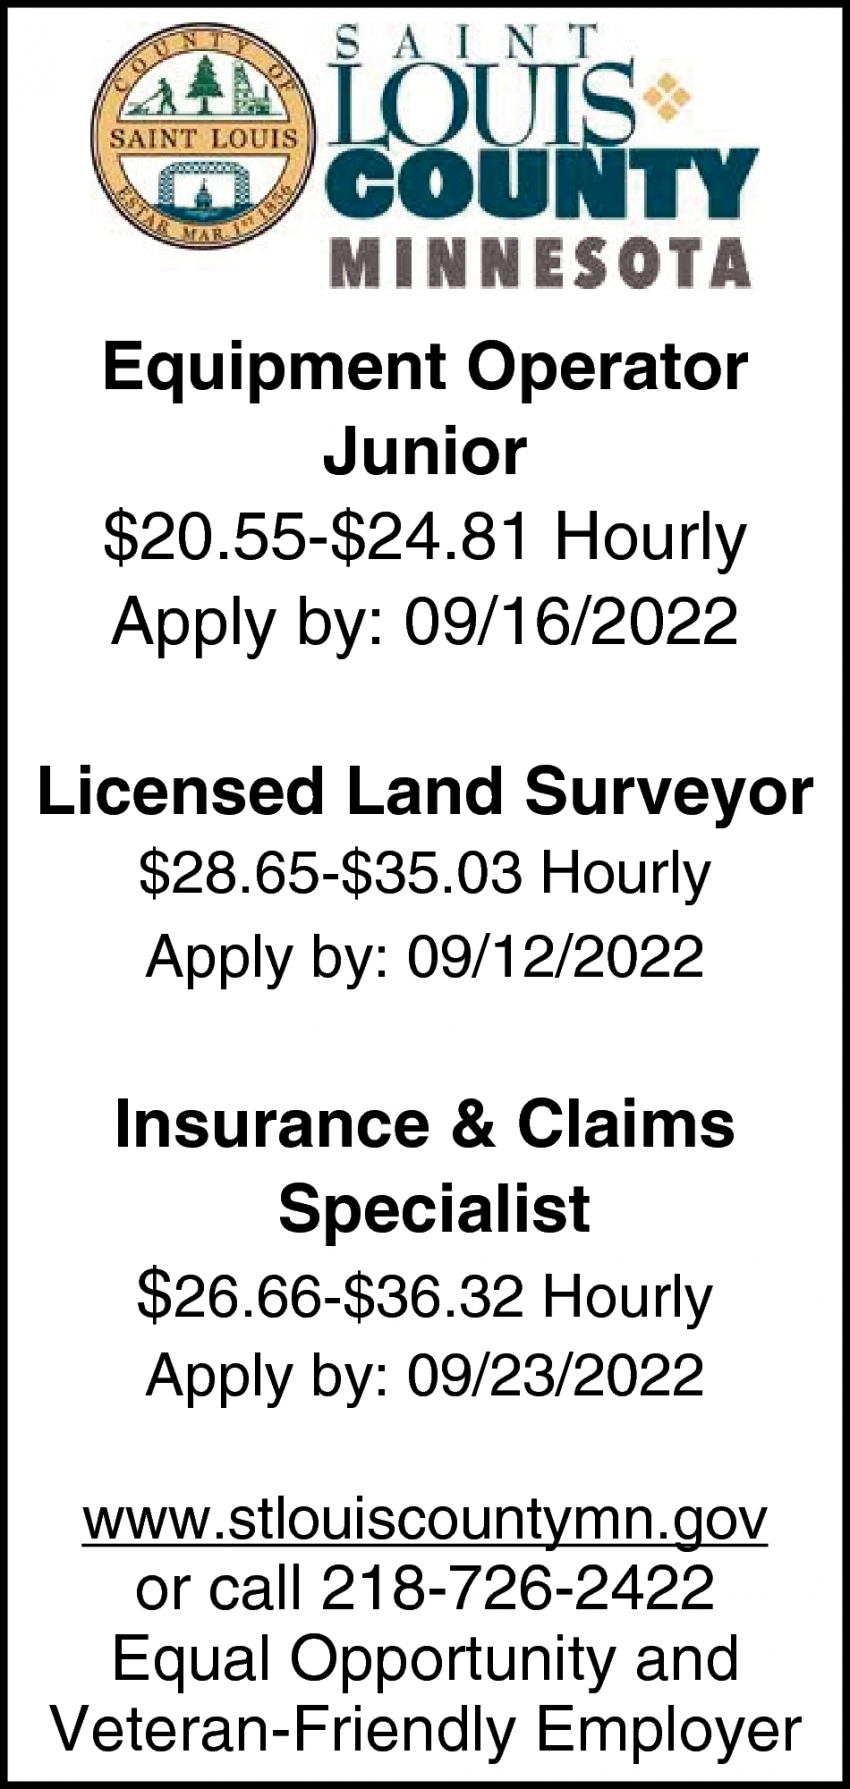 Equipment Operator Junior, Licensed Land Surveyor, Insurance & Claims Specialist